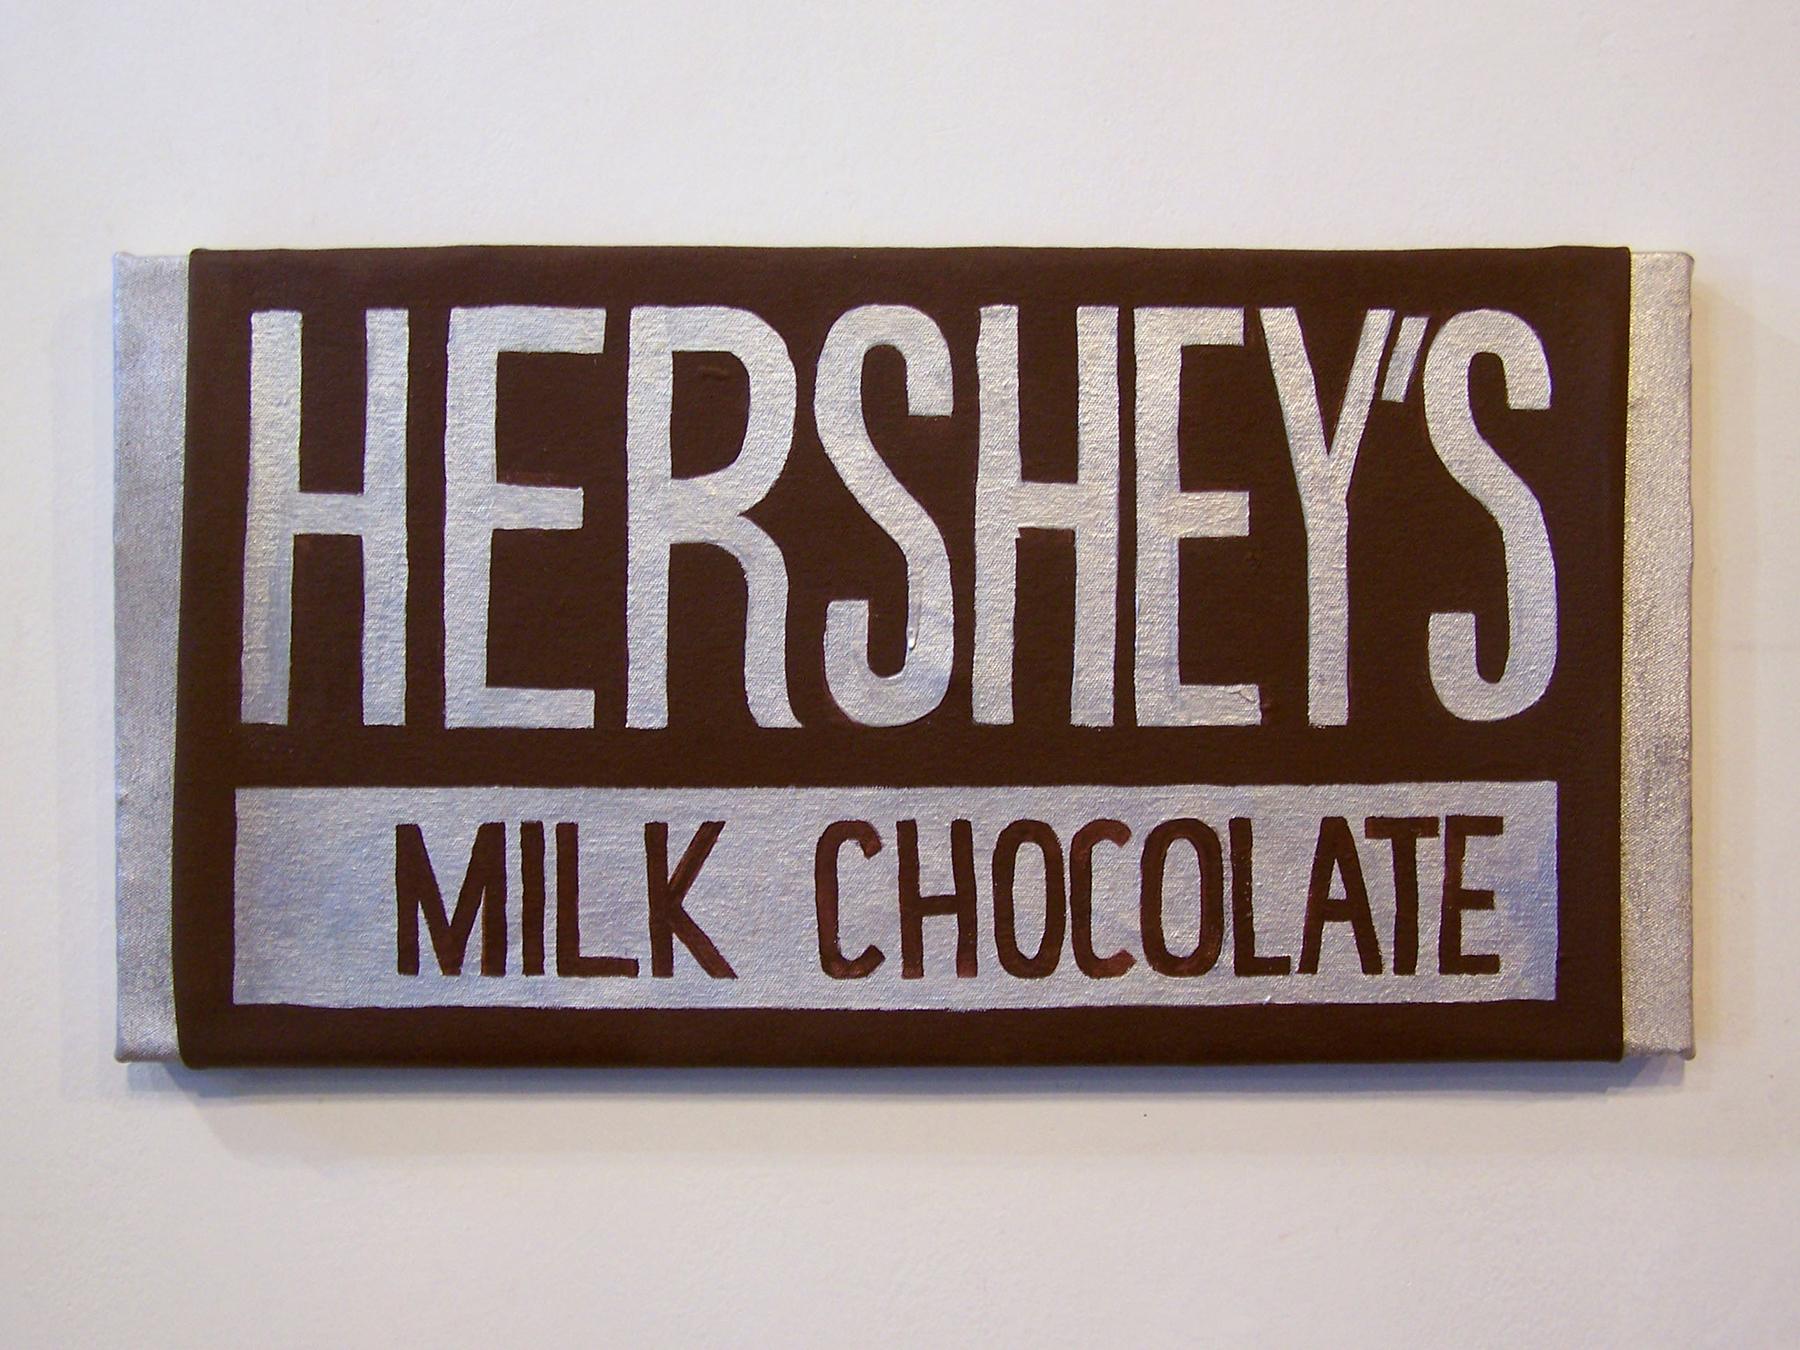 Tim Sharman Still-Life Sculpture - Hershey's Milk Chocolate